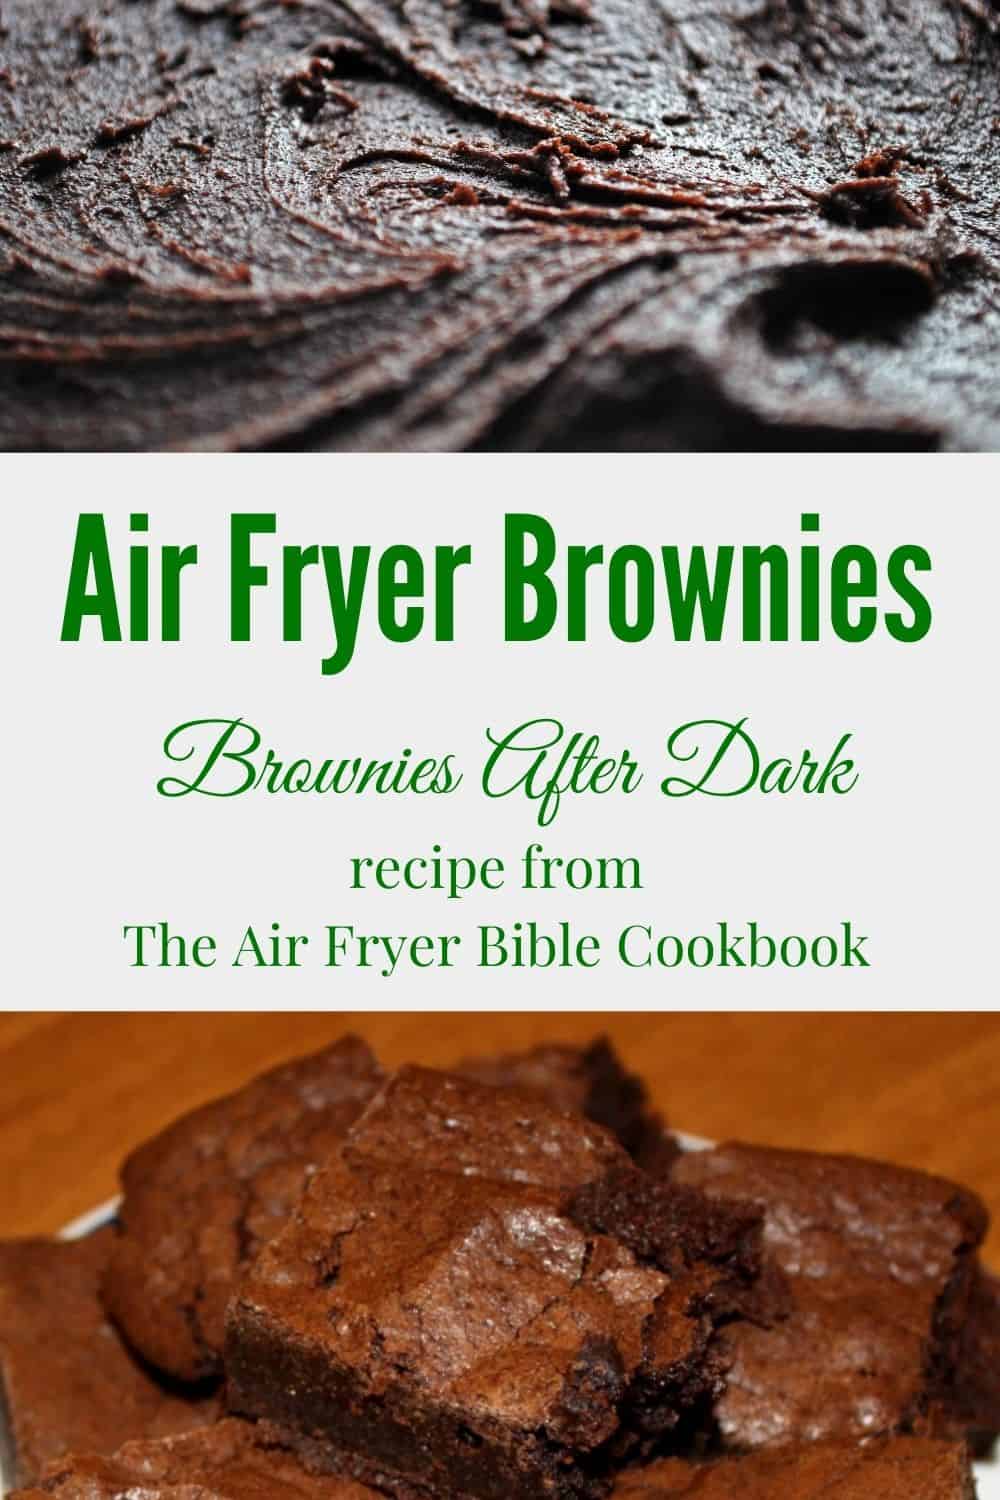 Air Fryer Brownies - recipe from The Air Fryer Bible Cookbook